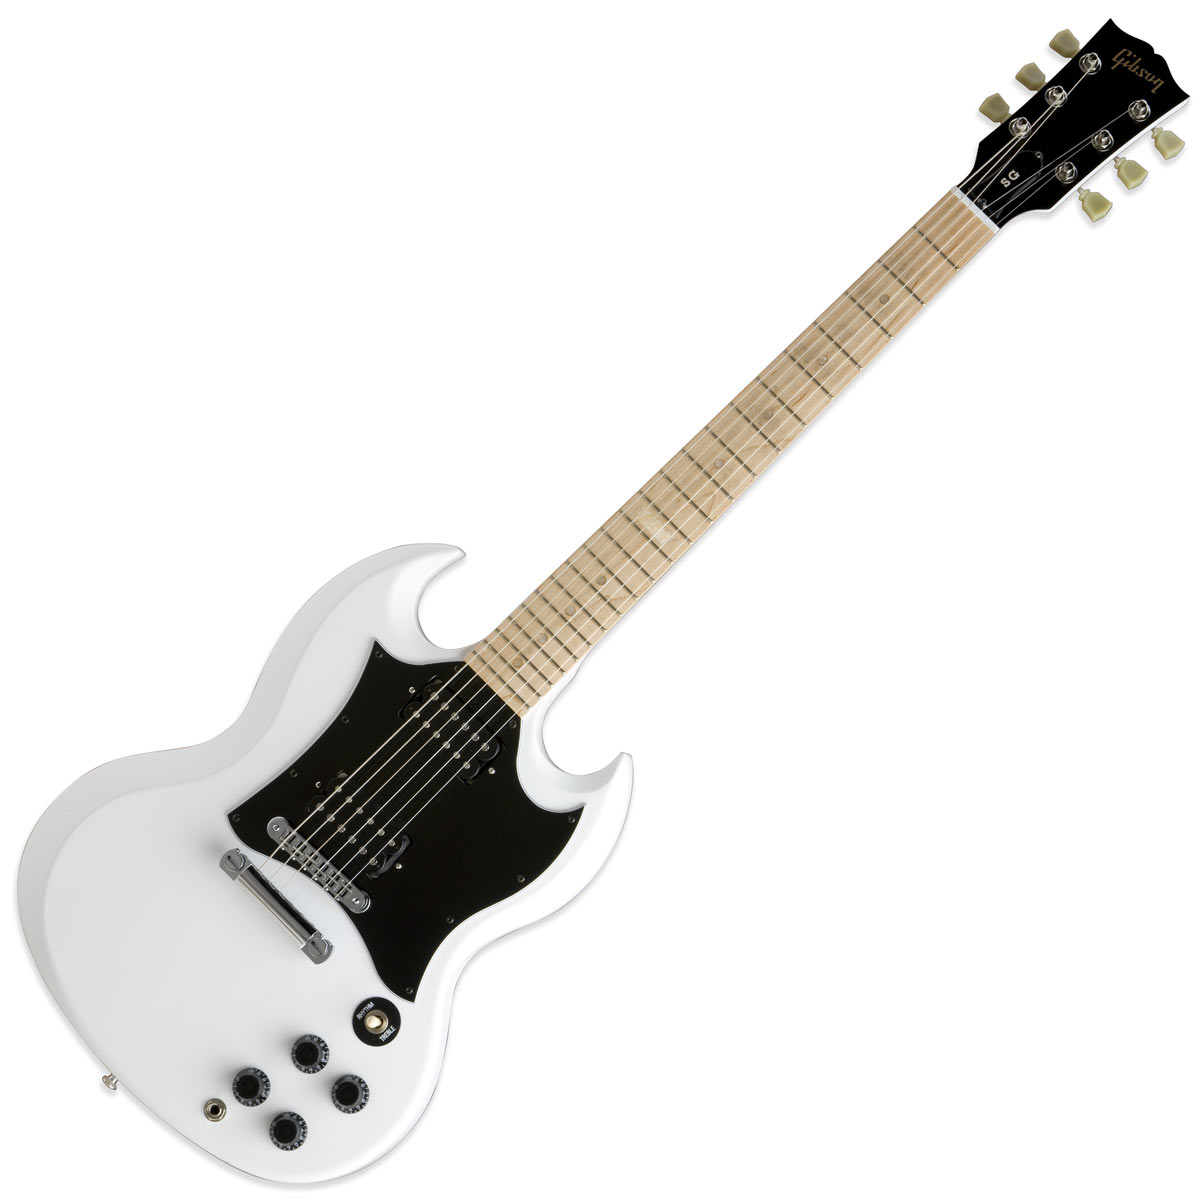 Gettin Myself A Nice Gibson Sg Raw Power, in white! :)